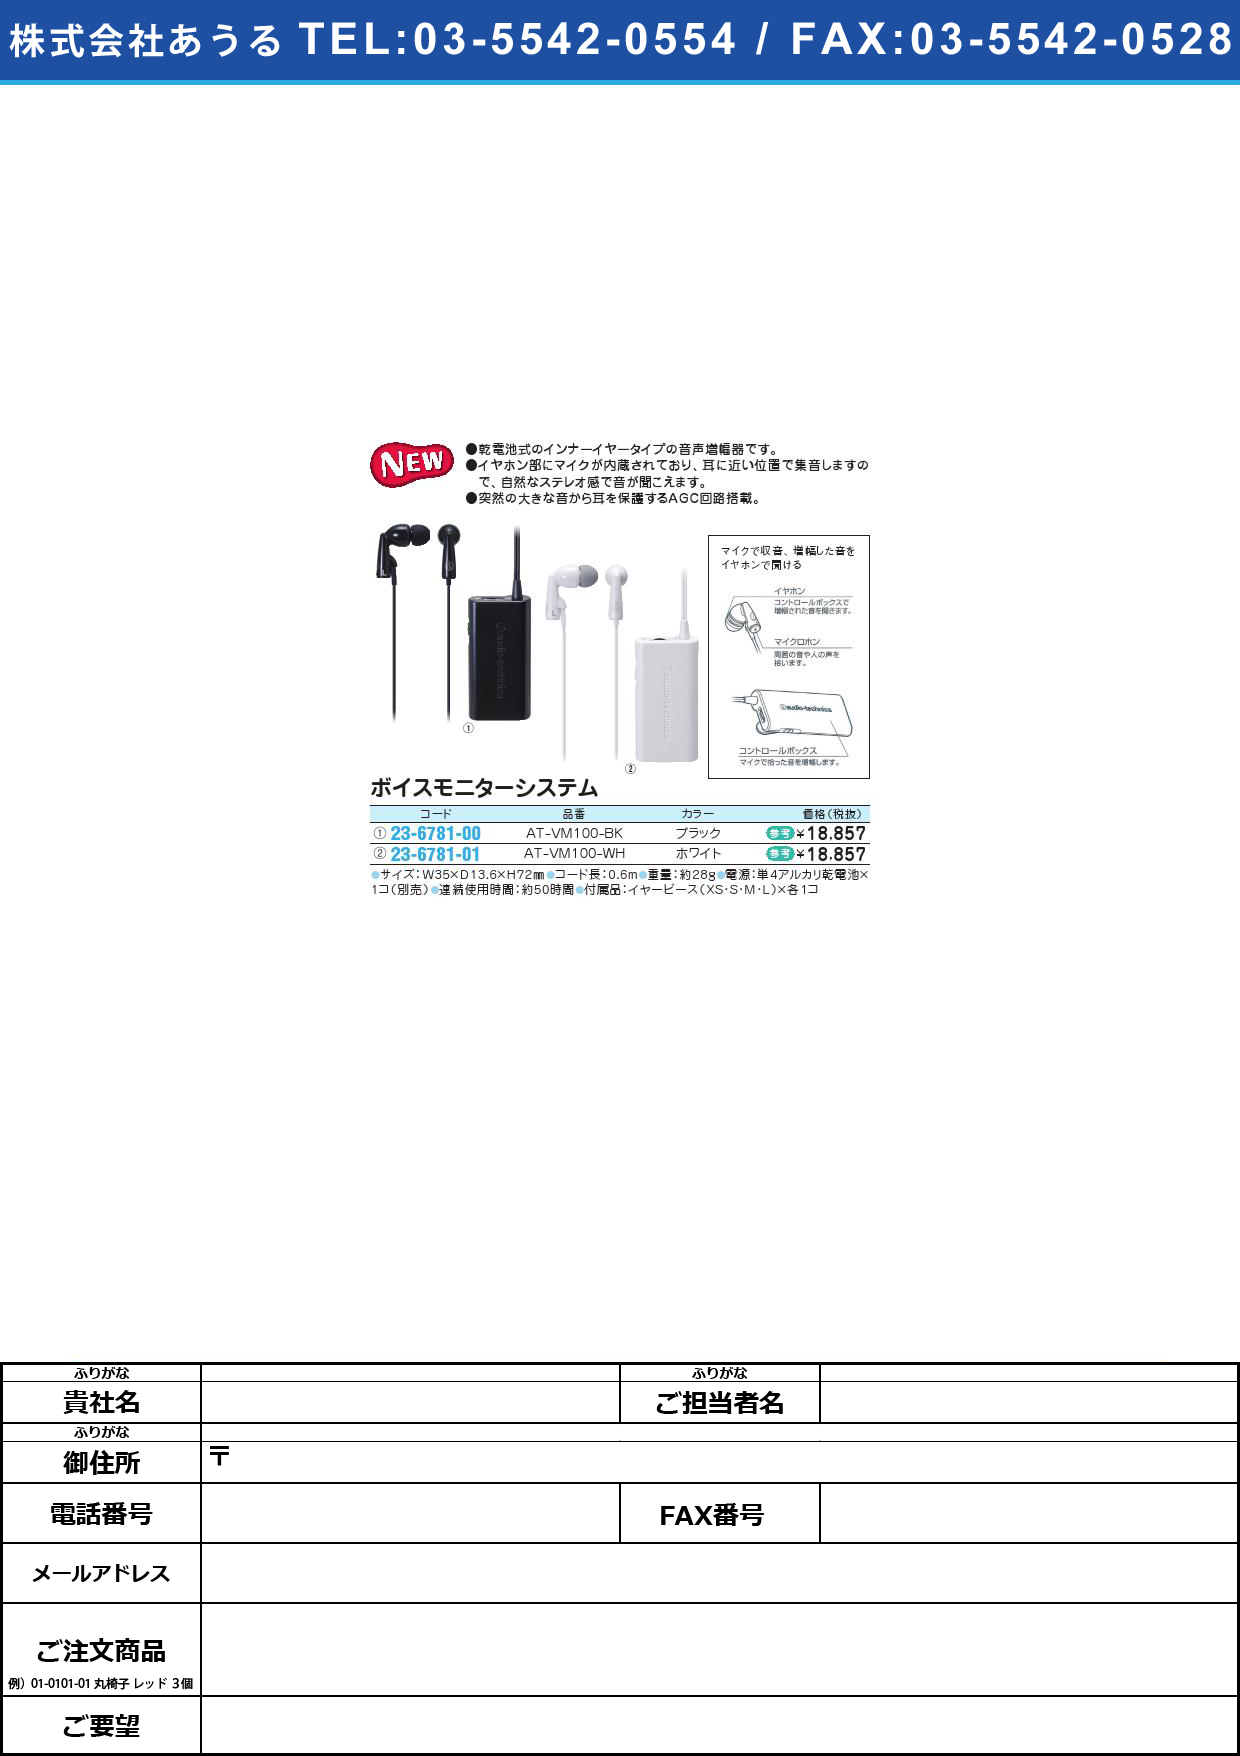 ★NEW!ボイスモニターシステム ﾎﾞｲｽﾓﾆﾀｰｼｽﾃﾑ AT-VM100-WH(ﾎﾜｲﾄ)【1台単位】(23-6781-01)